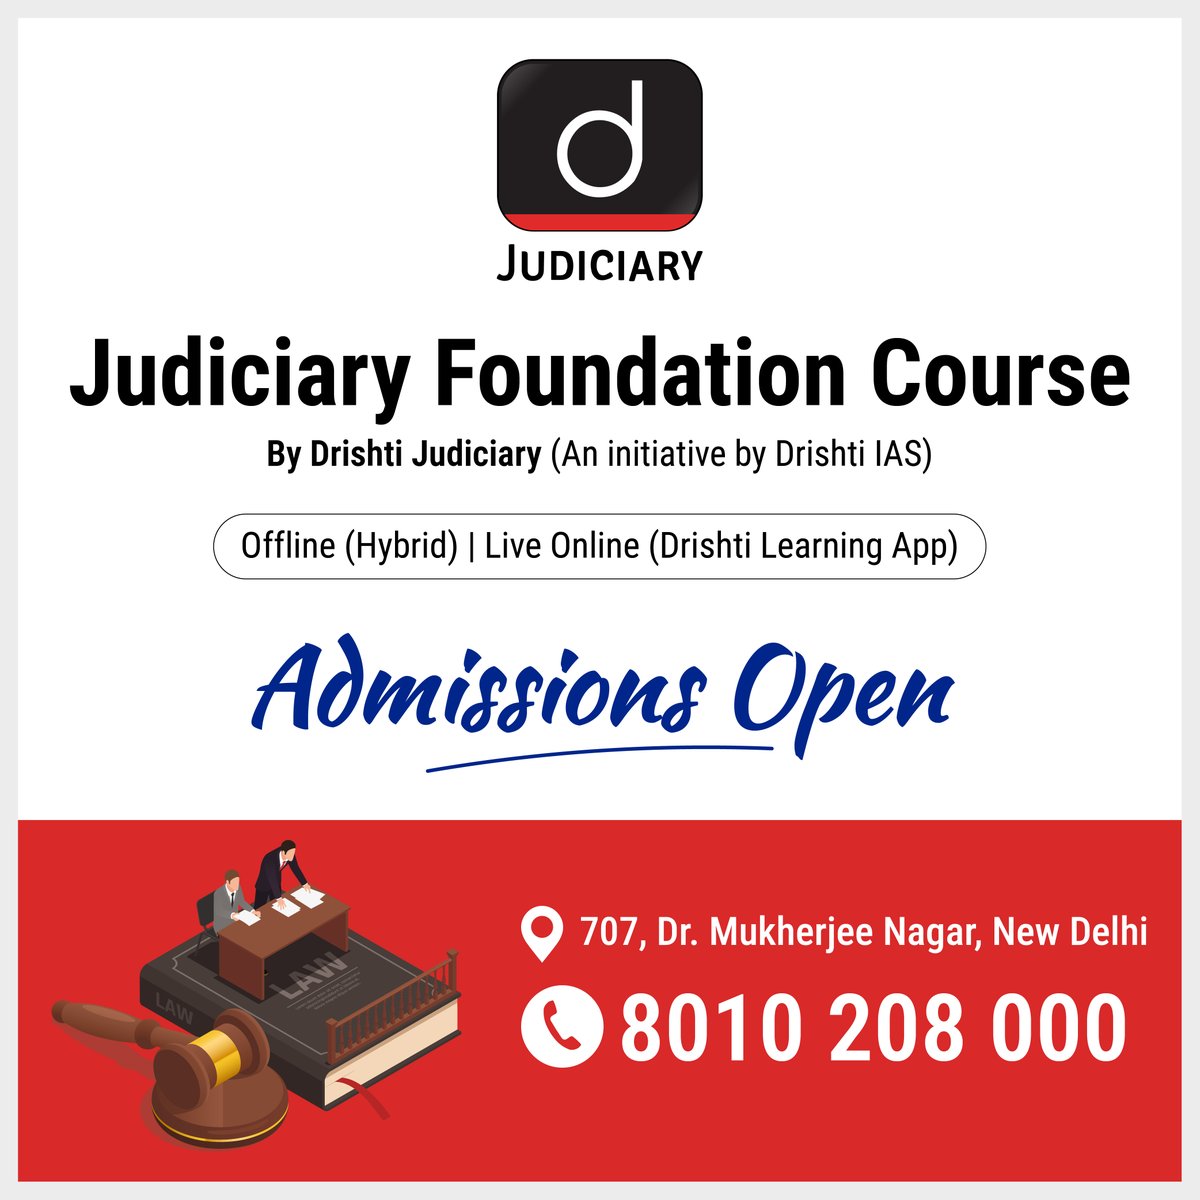 #DrishtiJudiciary (An #Initiative by #DrishtiIAS) announces its First #JudiciaryFoundationCourse! 

#SpecialDiscounts available on early registrations! 
Book your seat drishti.xyz/Registration-J… 
Request a call back drishti.xyz/Callback-Judic… 
 
#JudicialServices #NewBatch #TeamDrishti